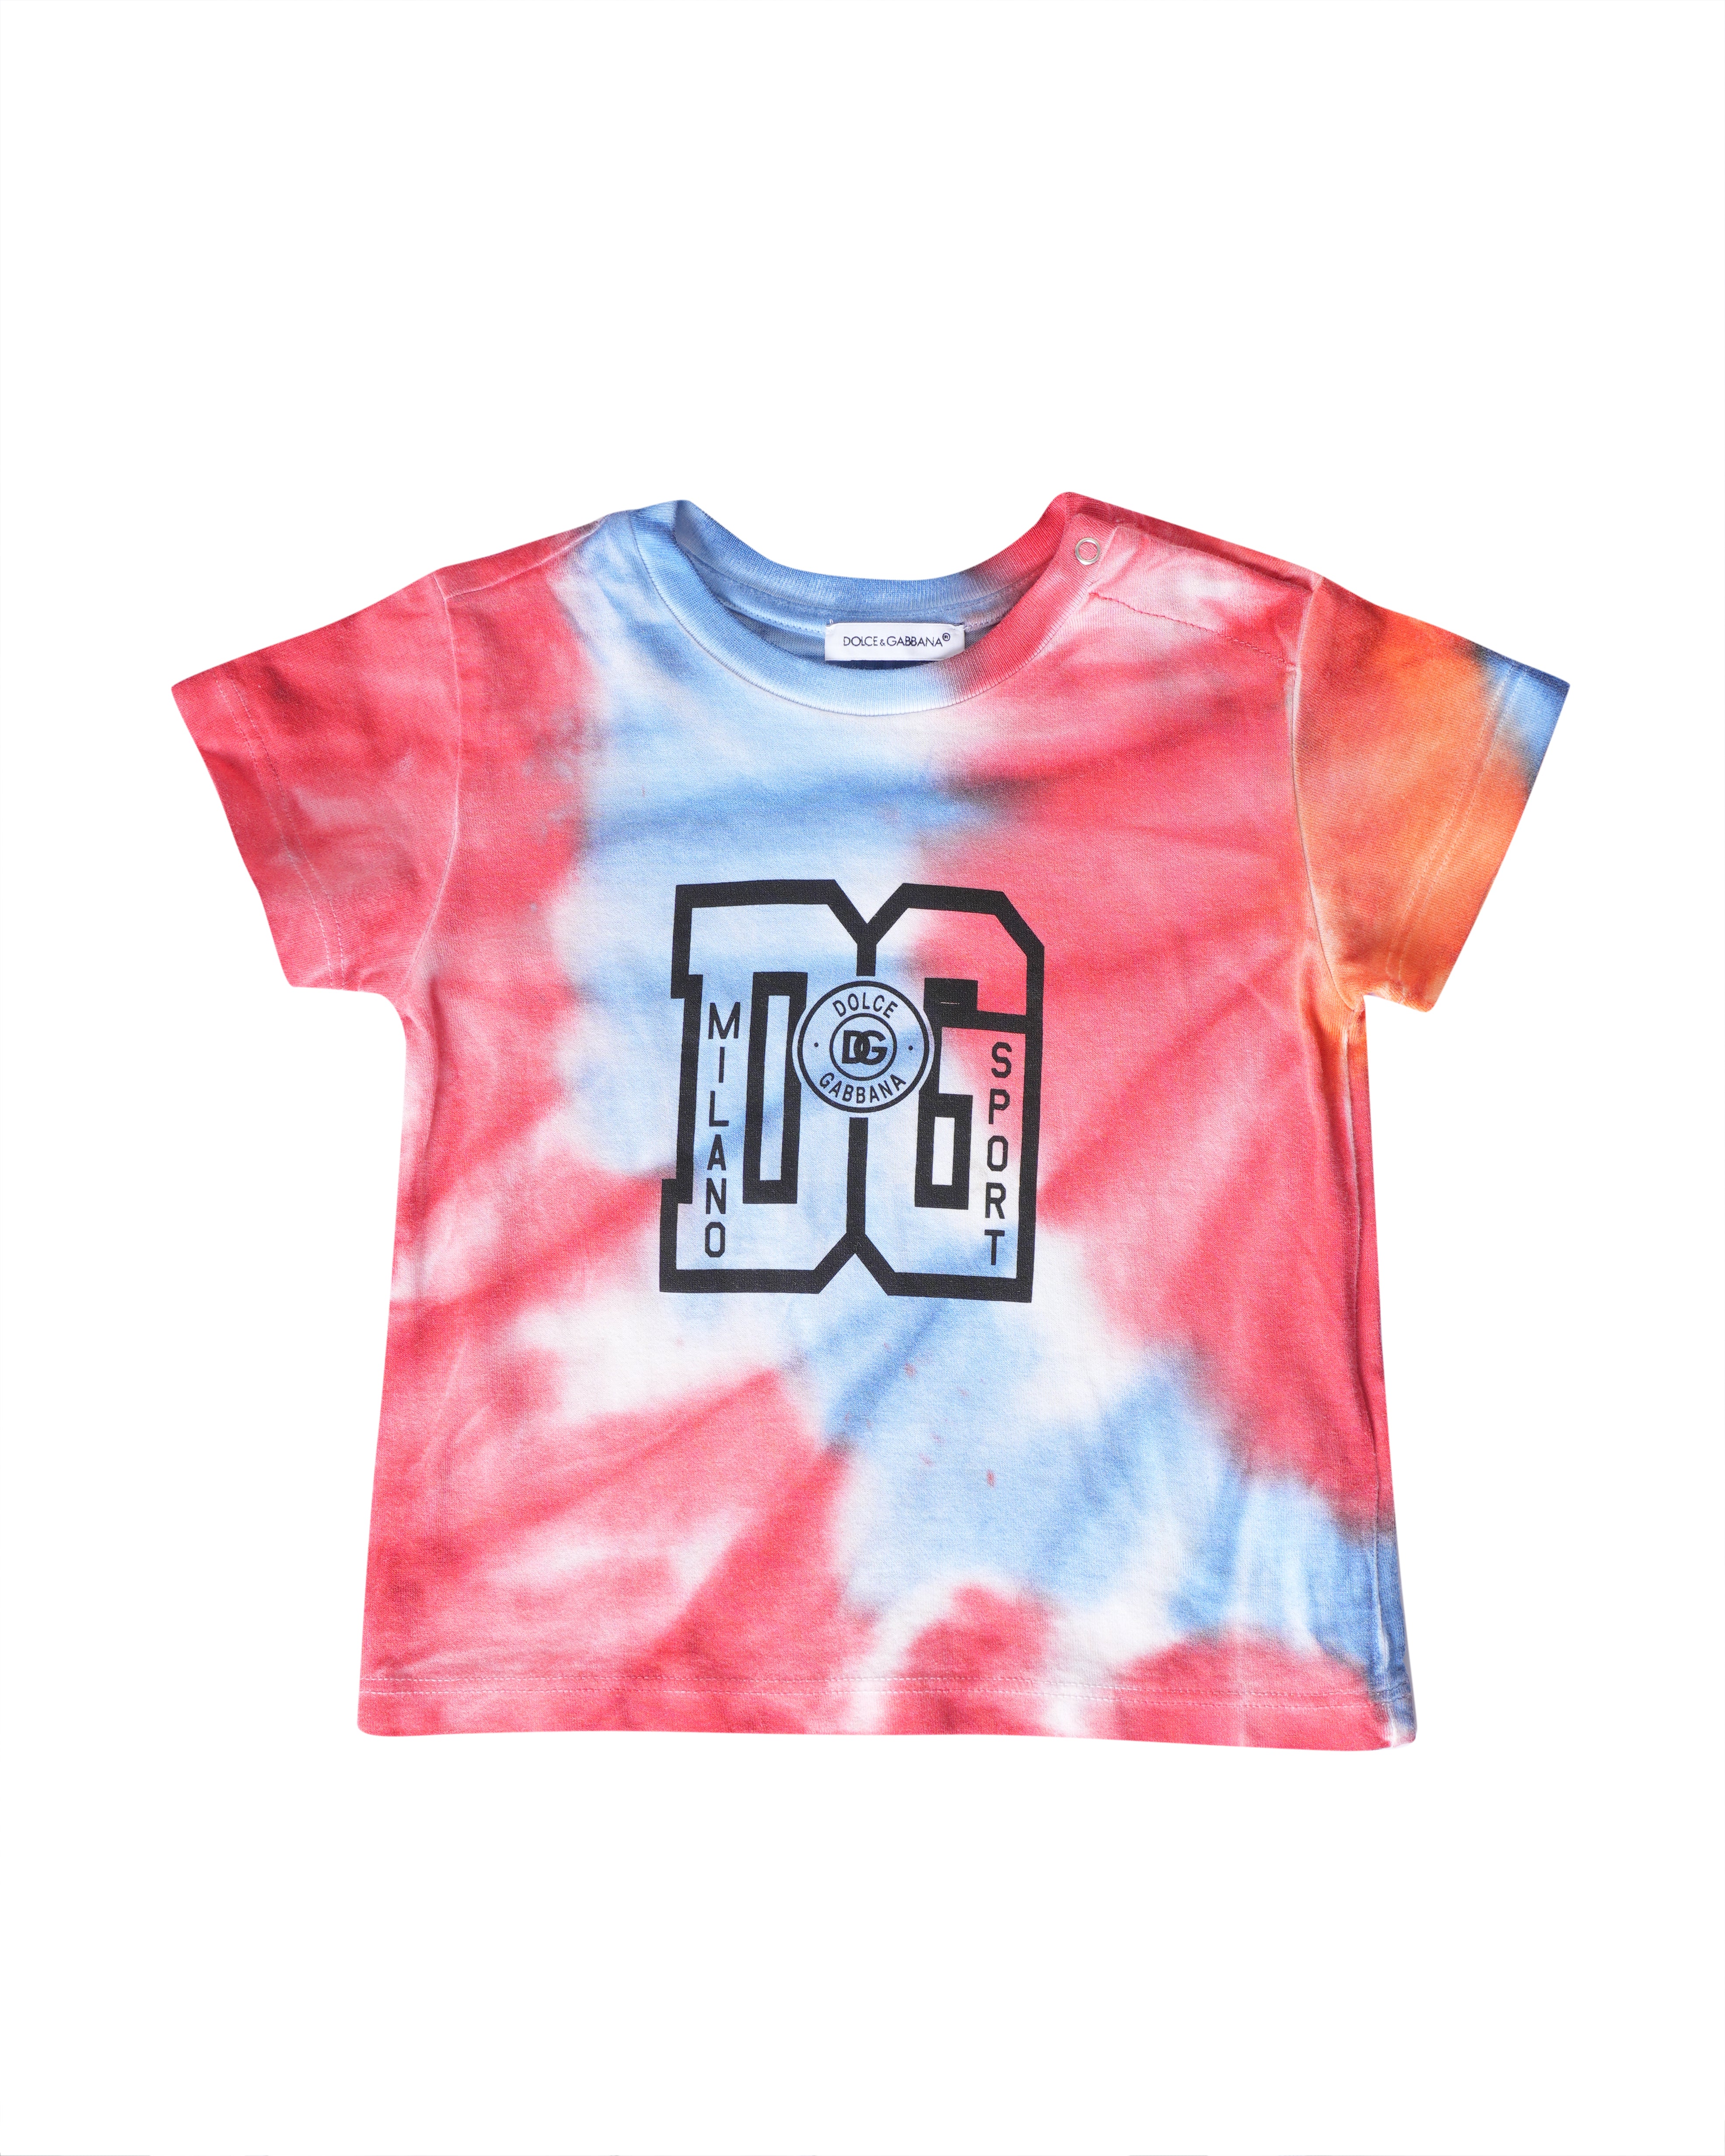 Dolce & Gabbana Tye Dye T-Shirt